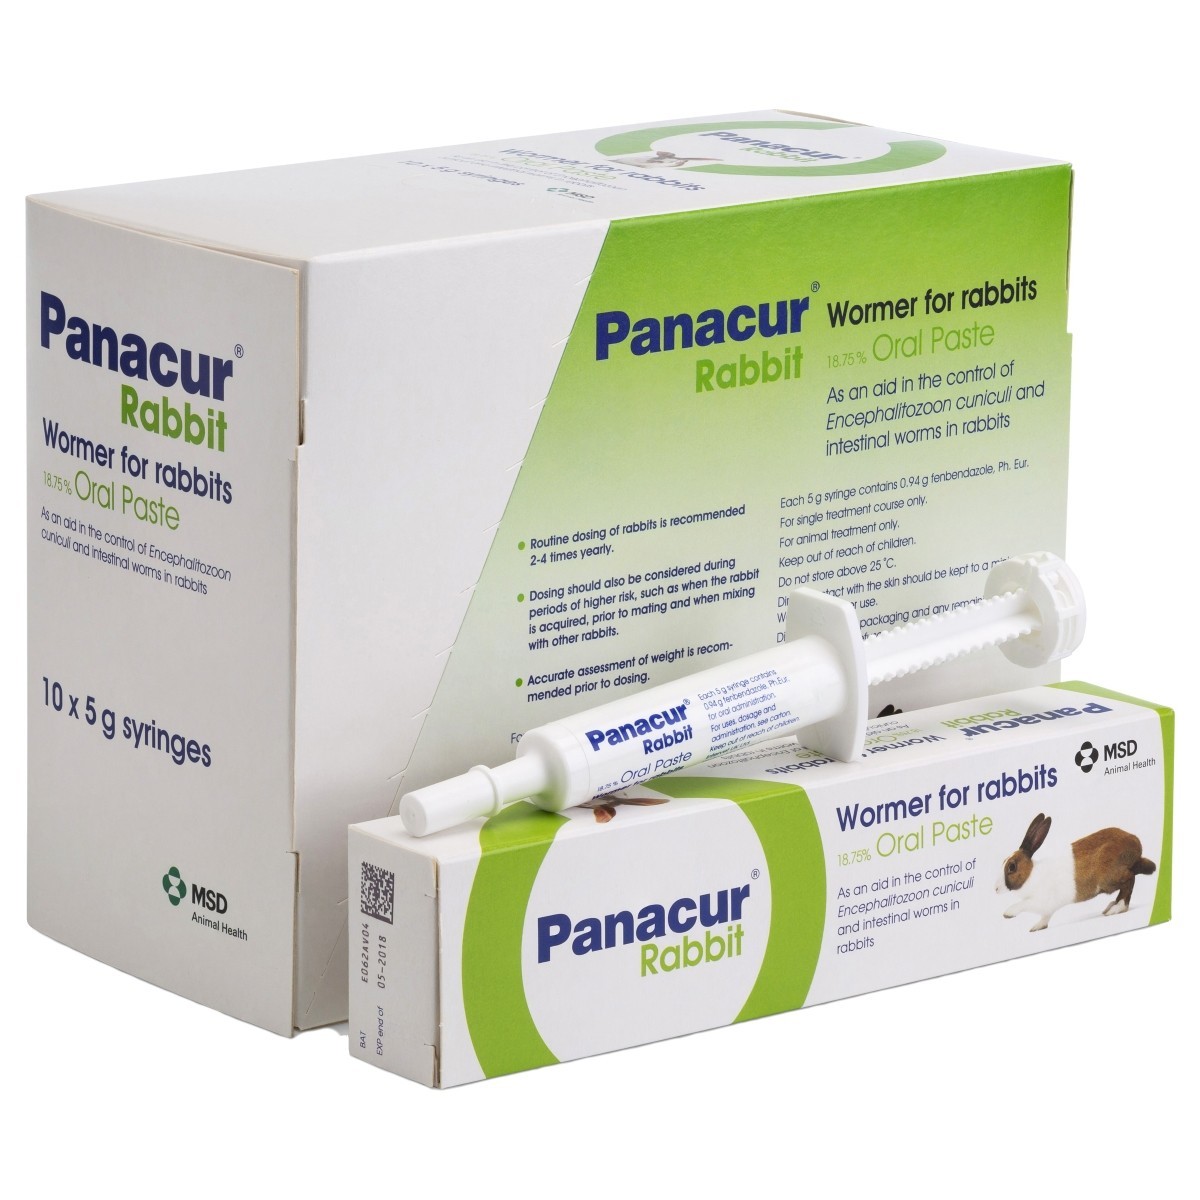 Donare Pentru o excursie de o zi mergi mai departe  Panacur Rabbit Oral Paste 5g - From £5.94